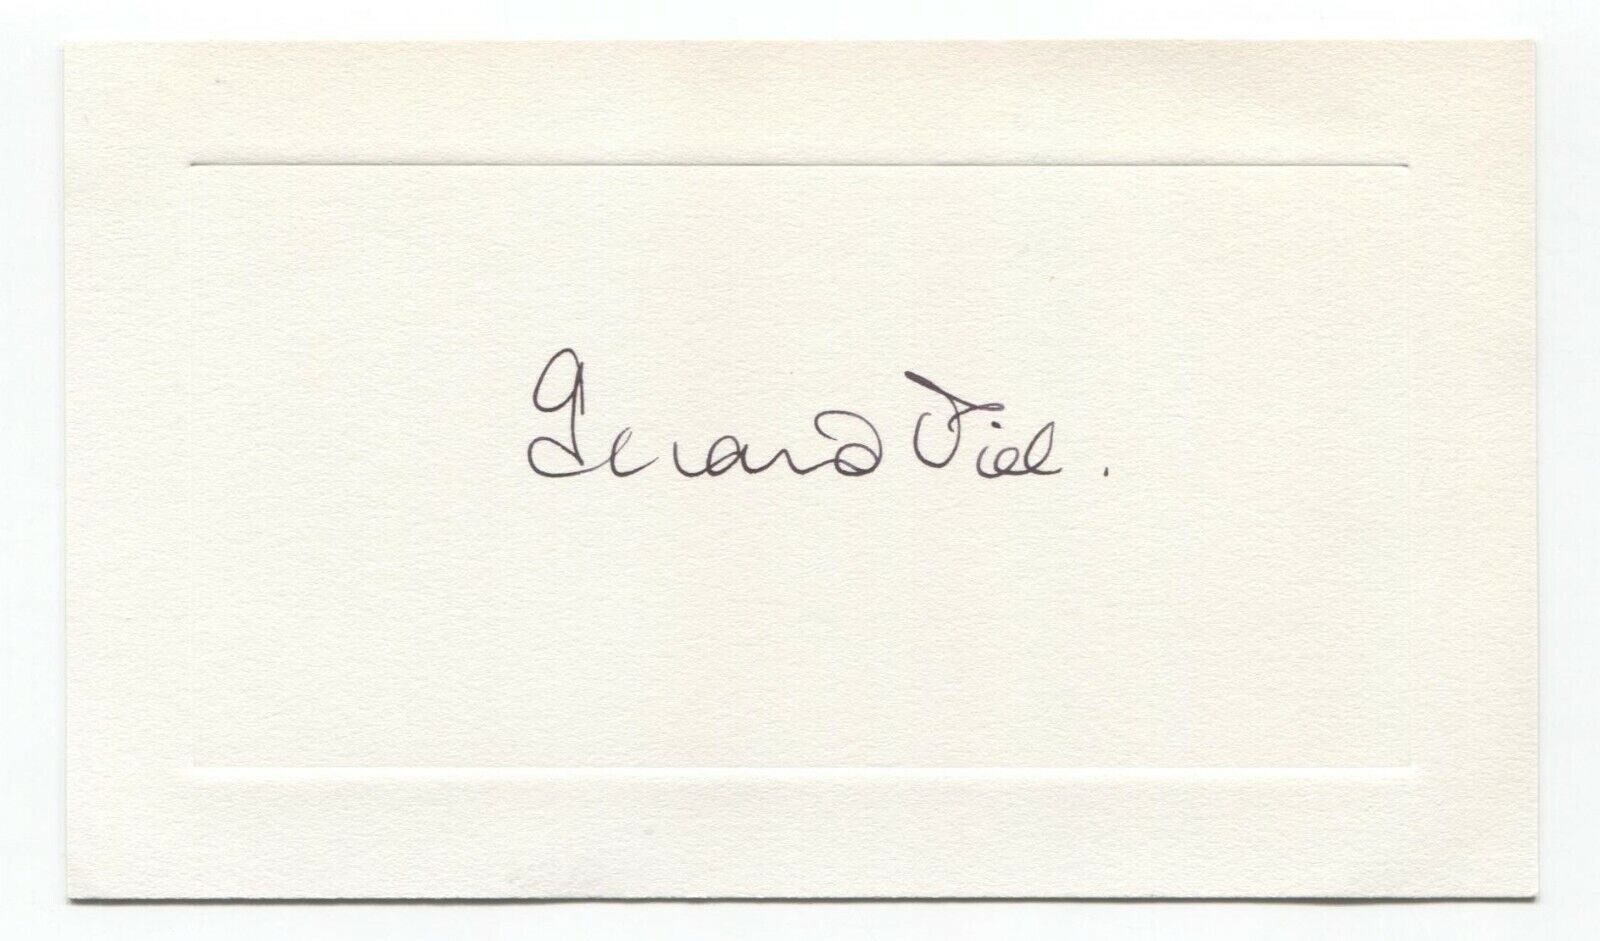 Gerald Piel Signed Card Autographed Signature Publisher Scientific American